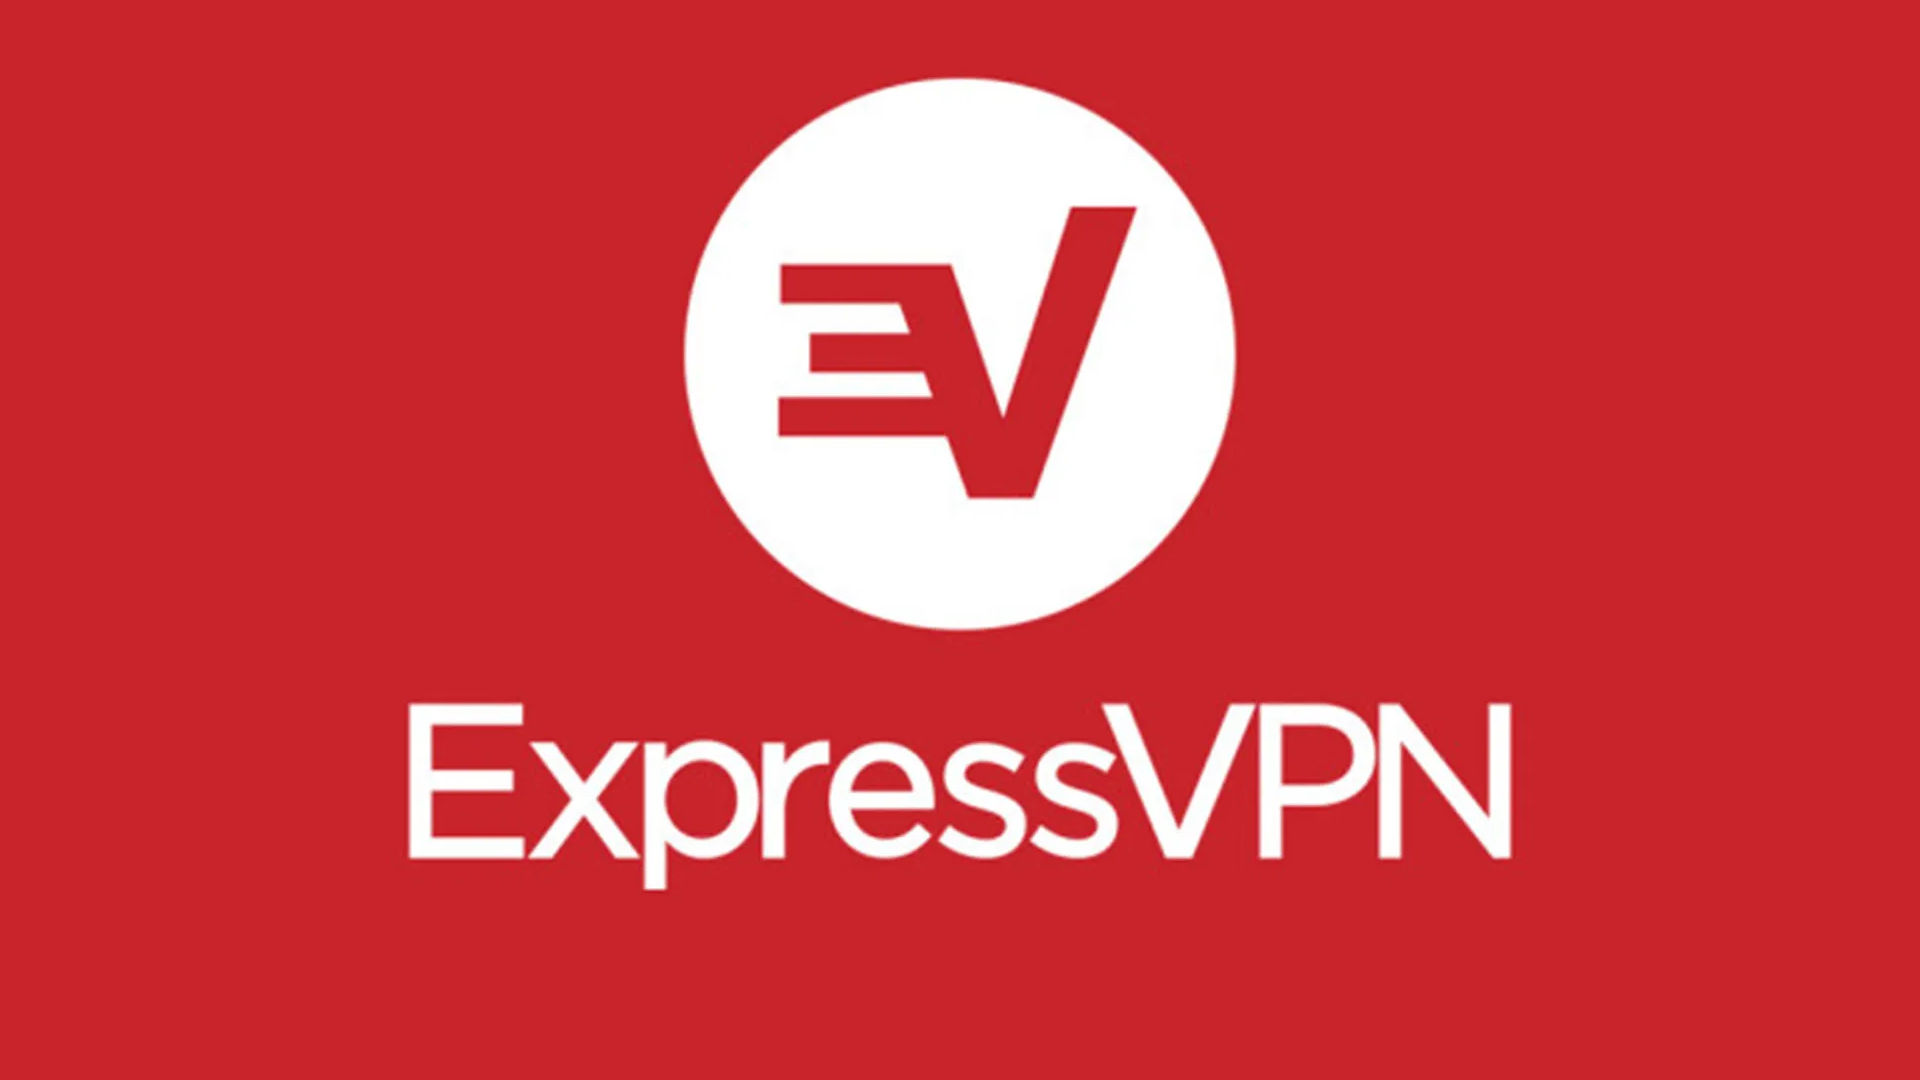 ExpressVPNロゴ